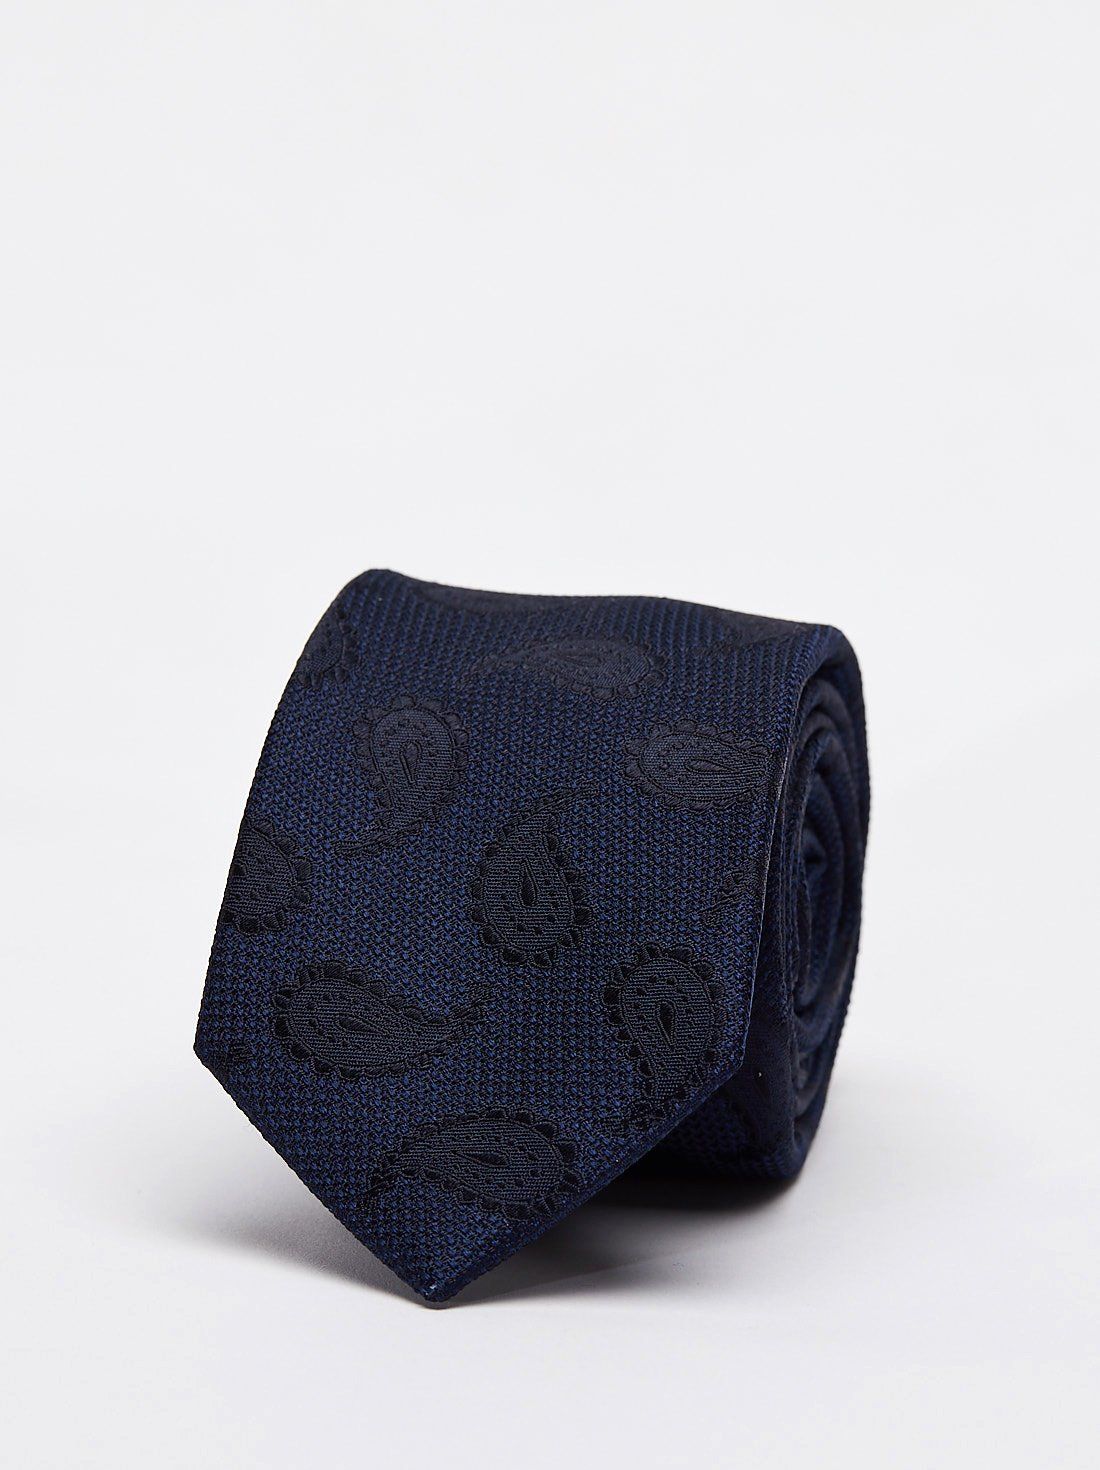 Blue Tie Paisley 